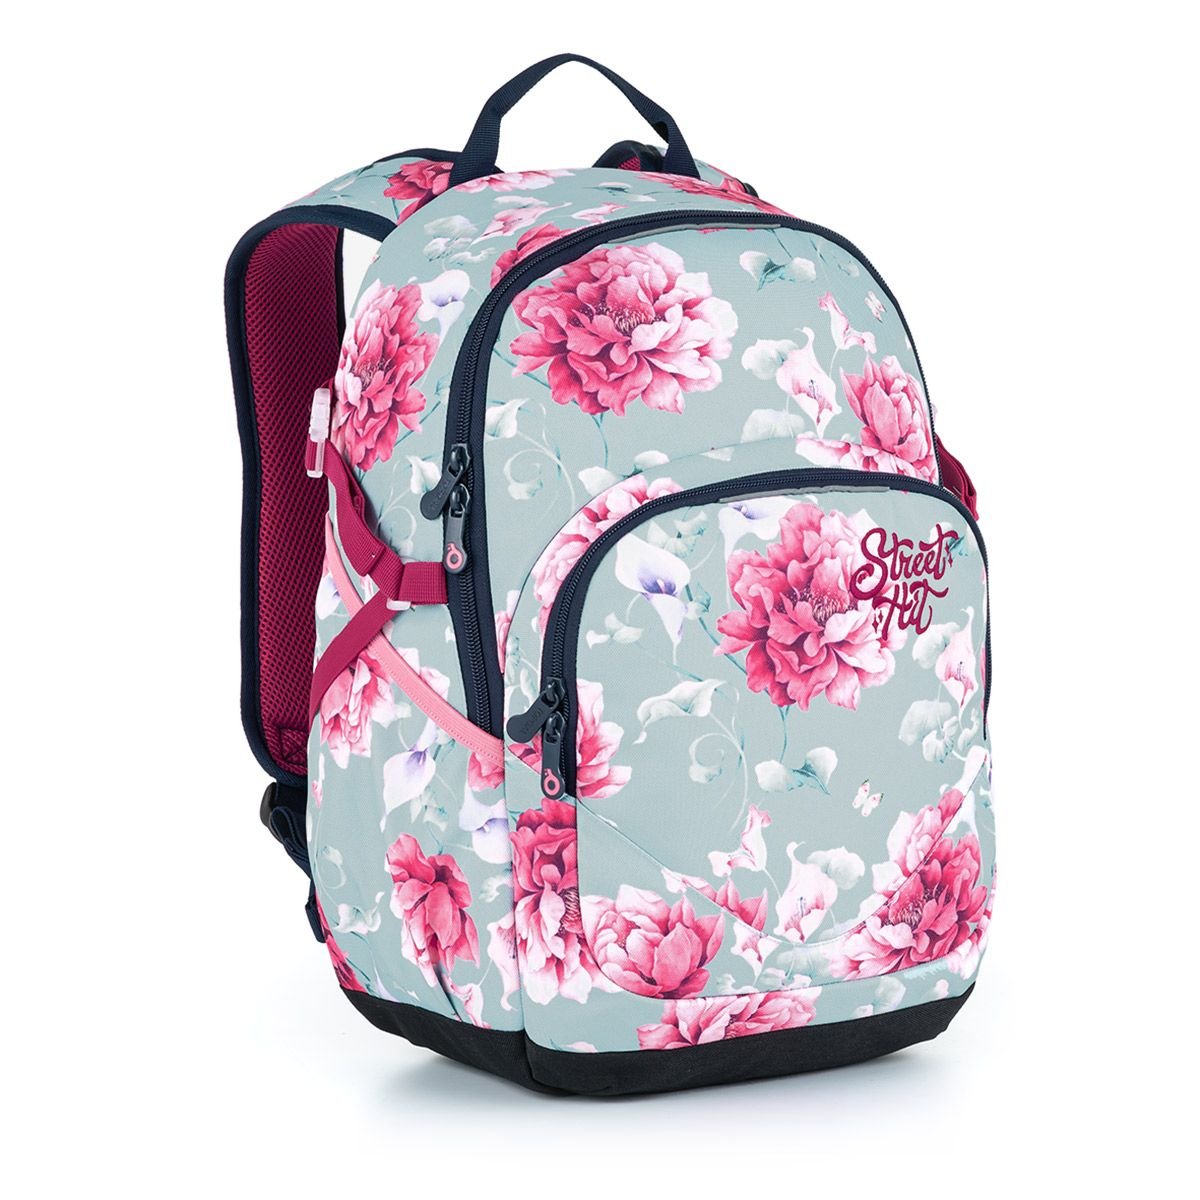 Studentský batoh s květinami Topgal YOKO 21030 G